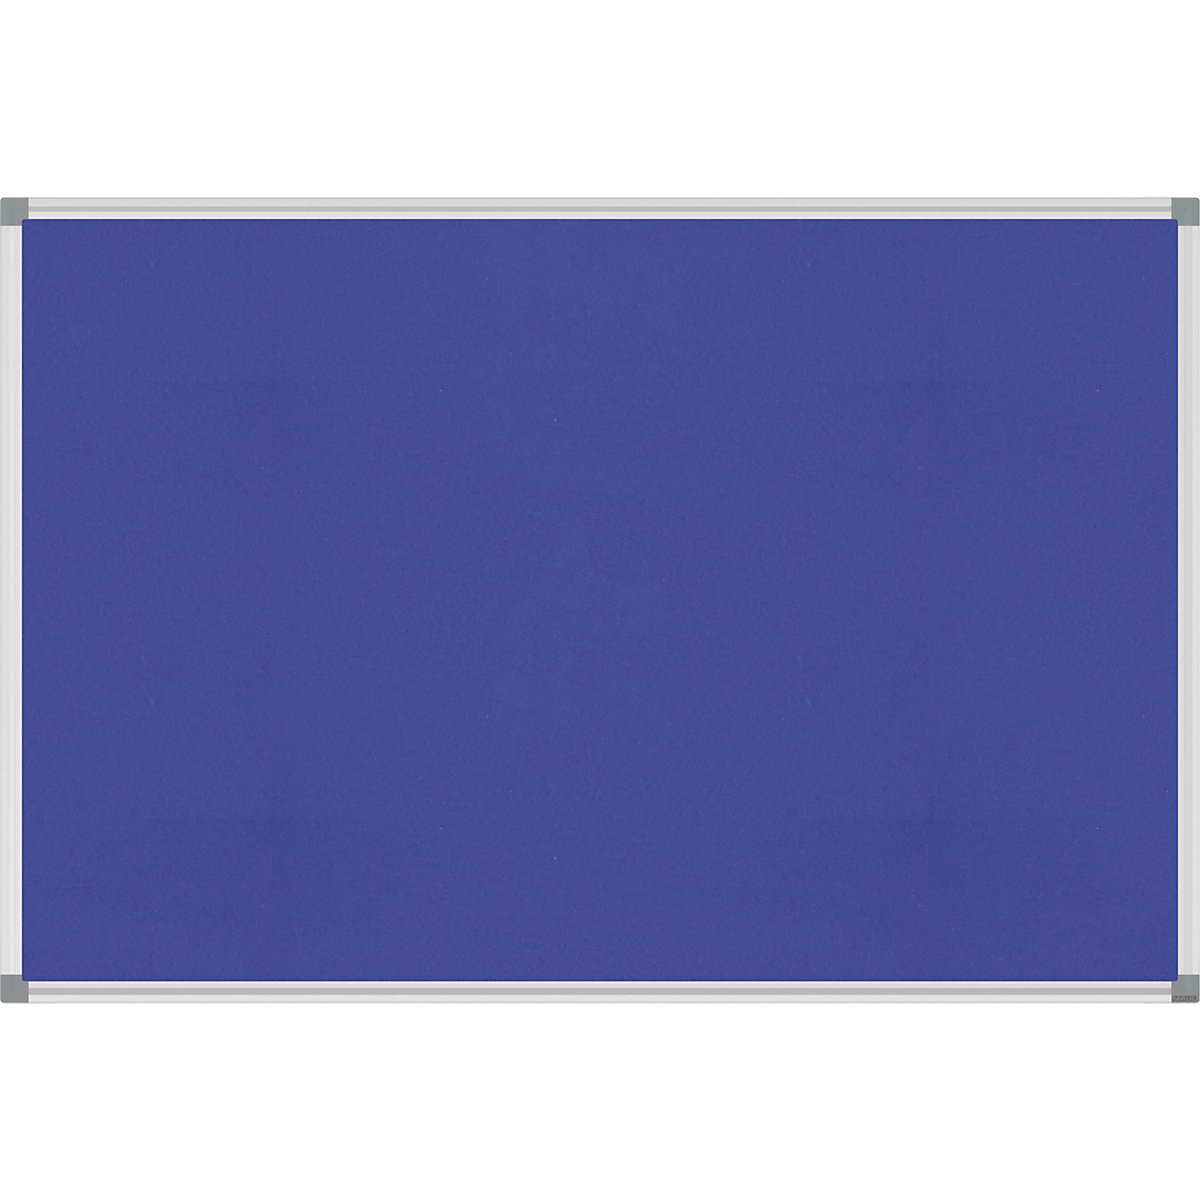 Pinboard STANDARD – MAUL, bekleding van vilt, blauw, b x h = 900 x 600 mm-4